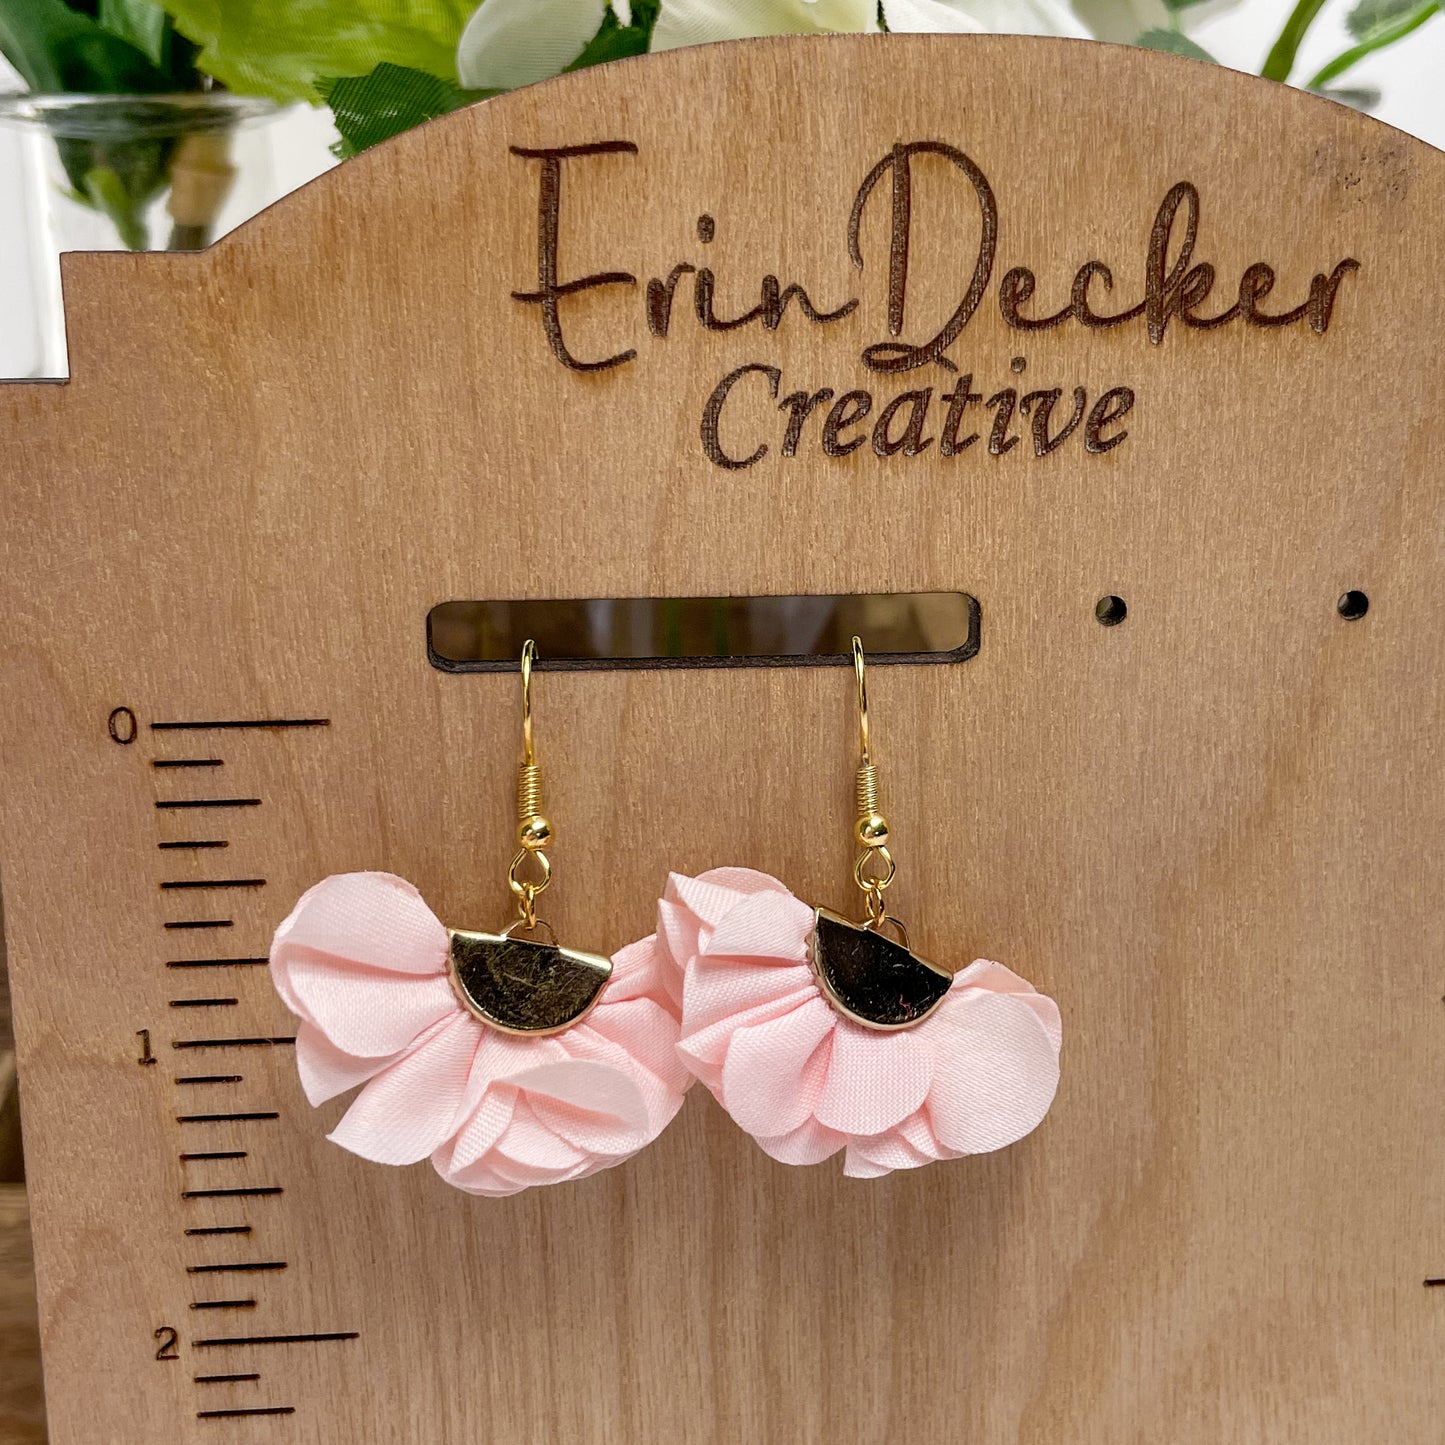 Jackie Style Earrings - Blush Pink Petals | Dangle Earrings with Hooks